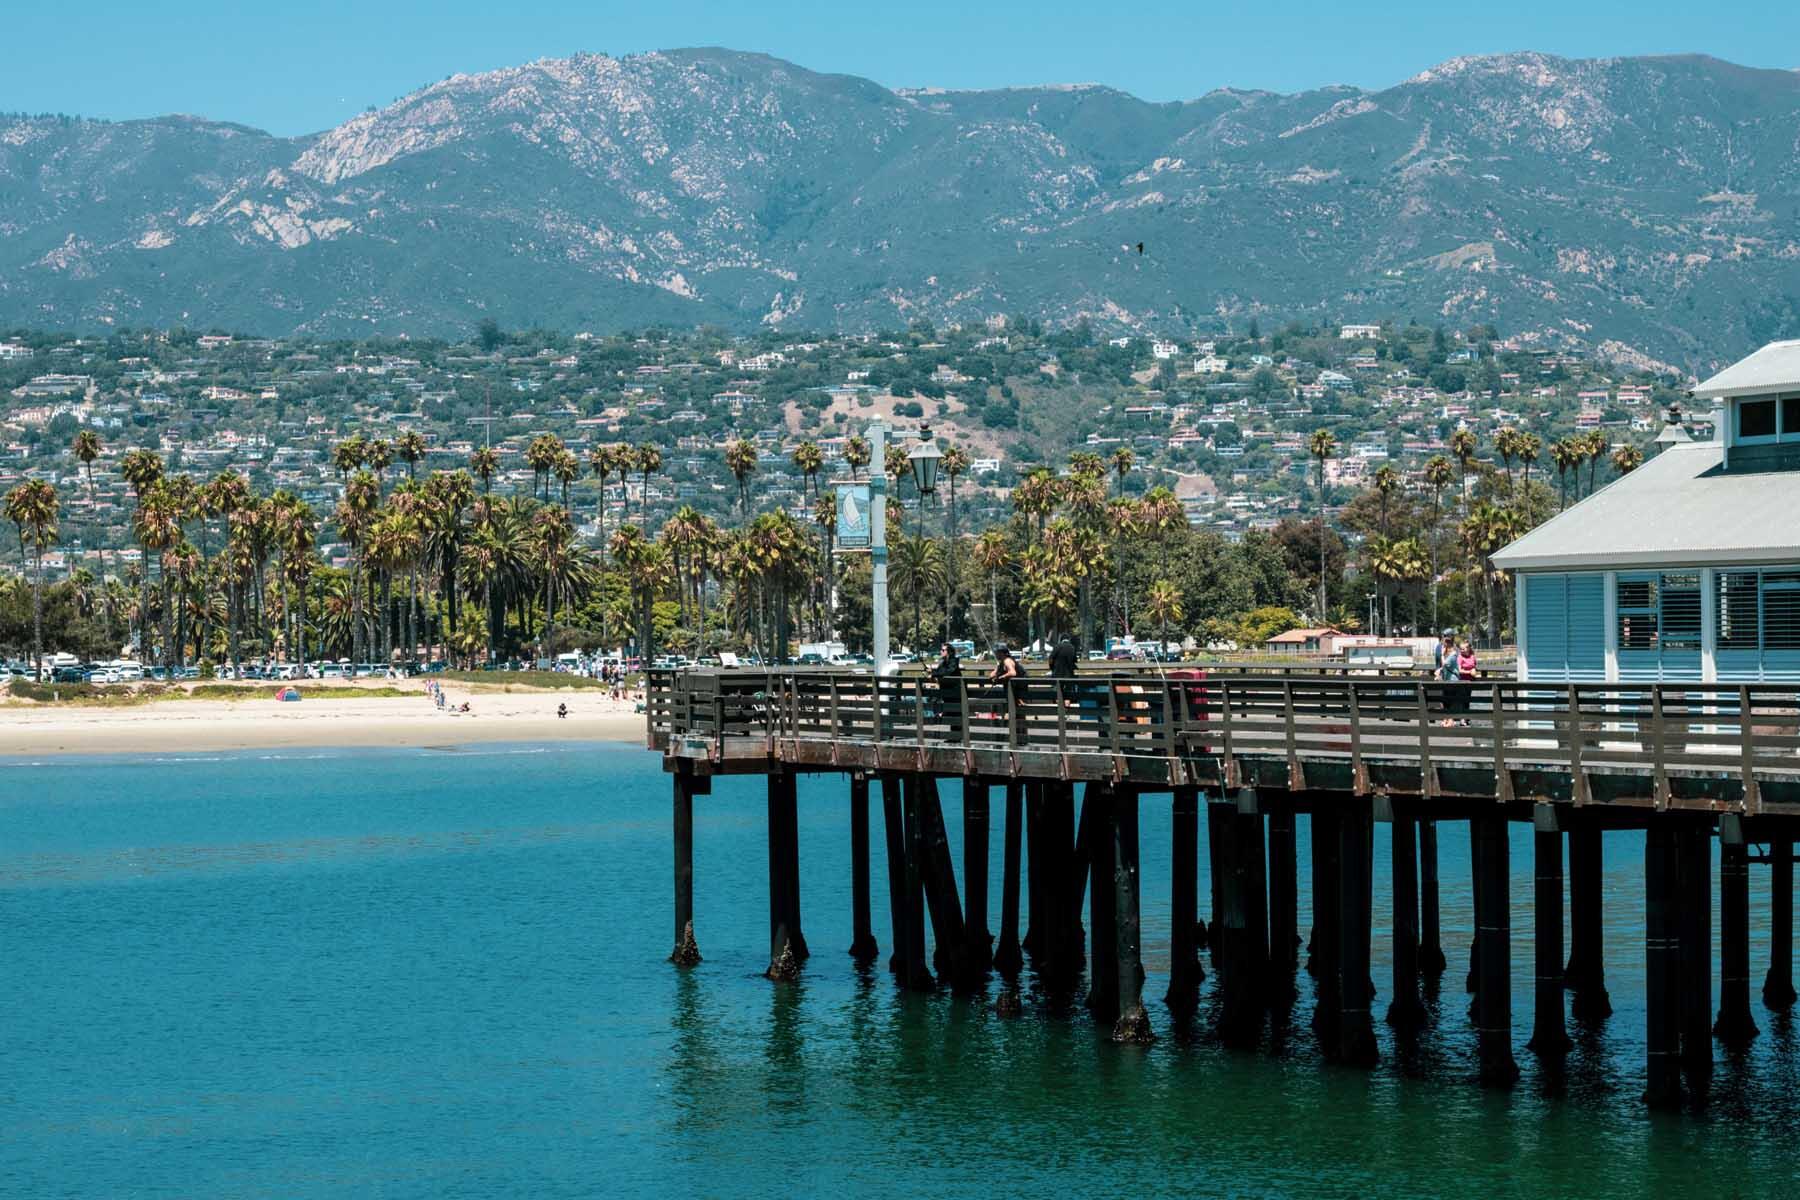 Visit Santa Barbara on a trip to California